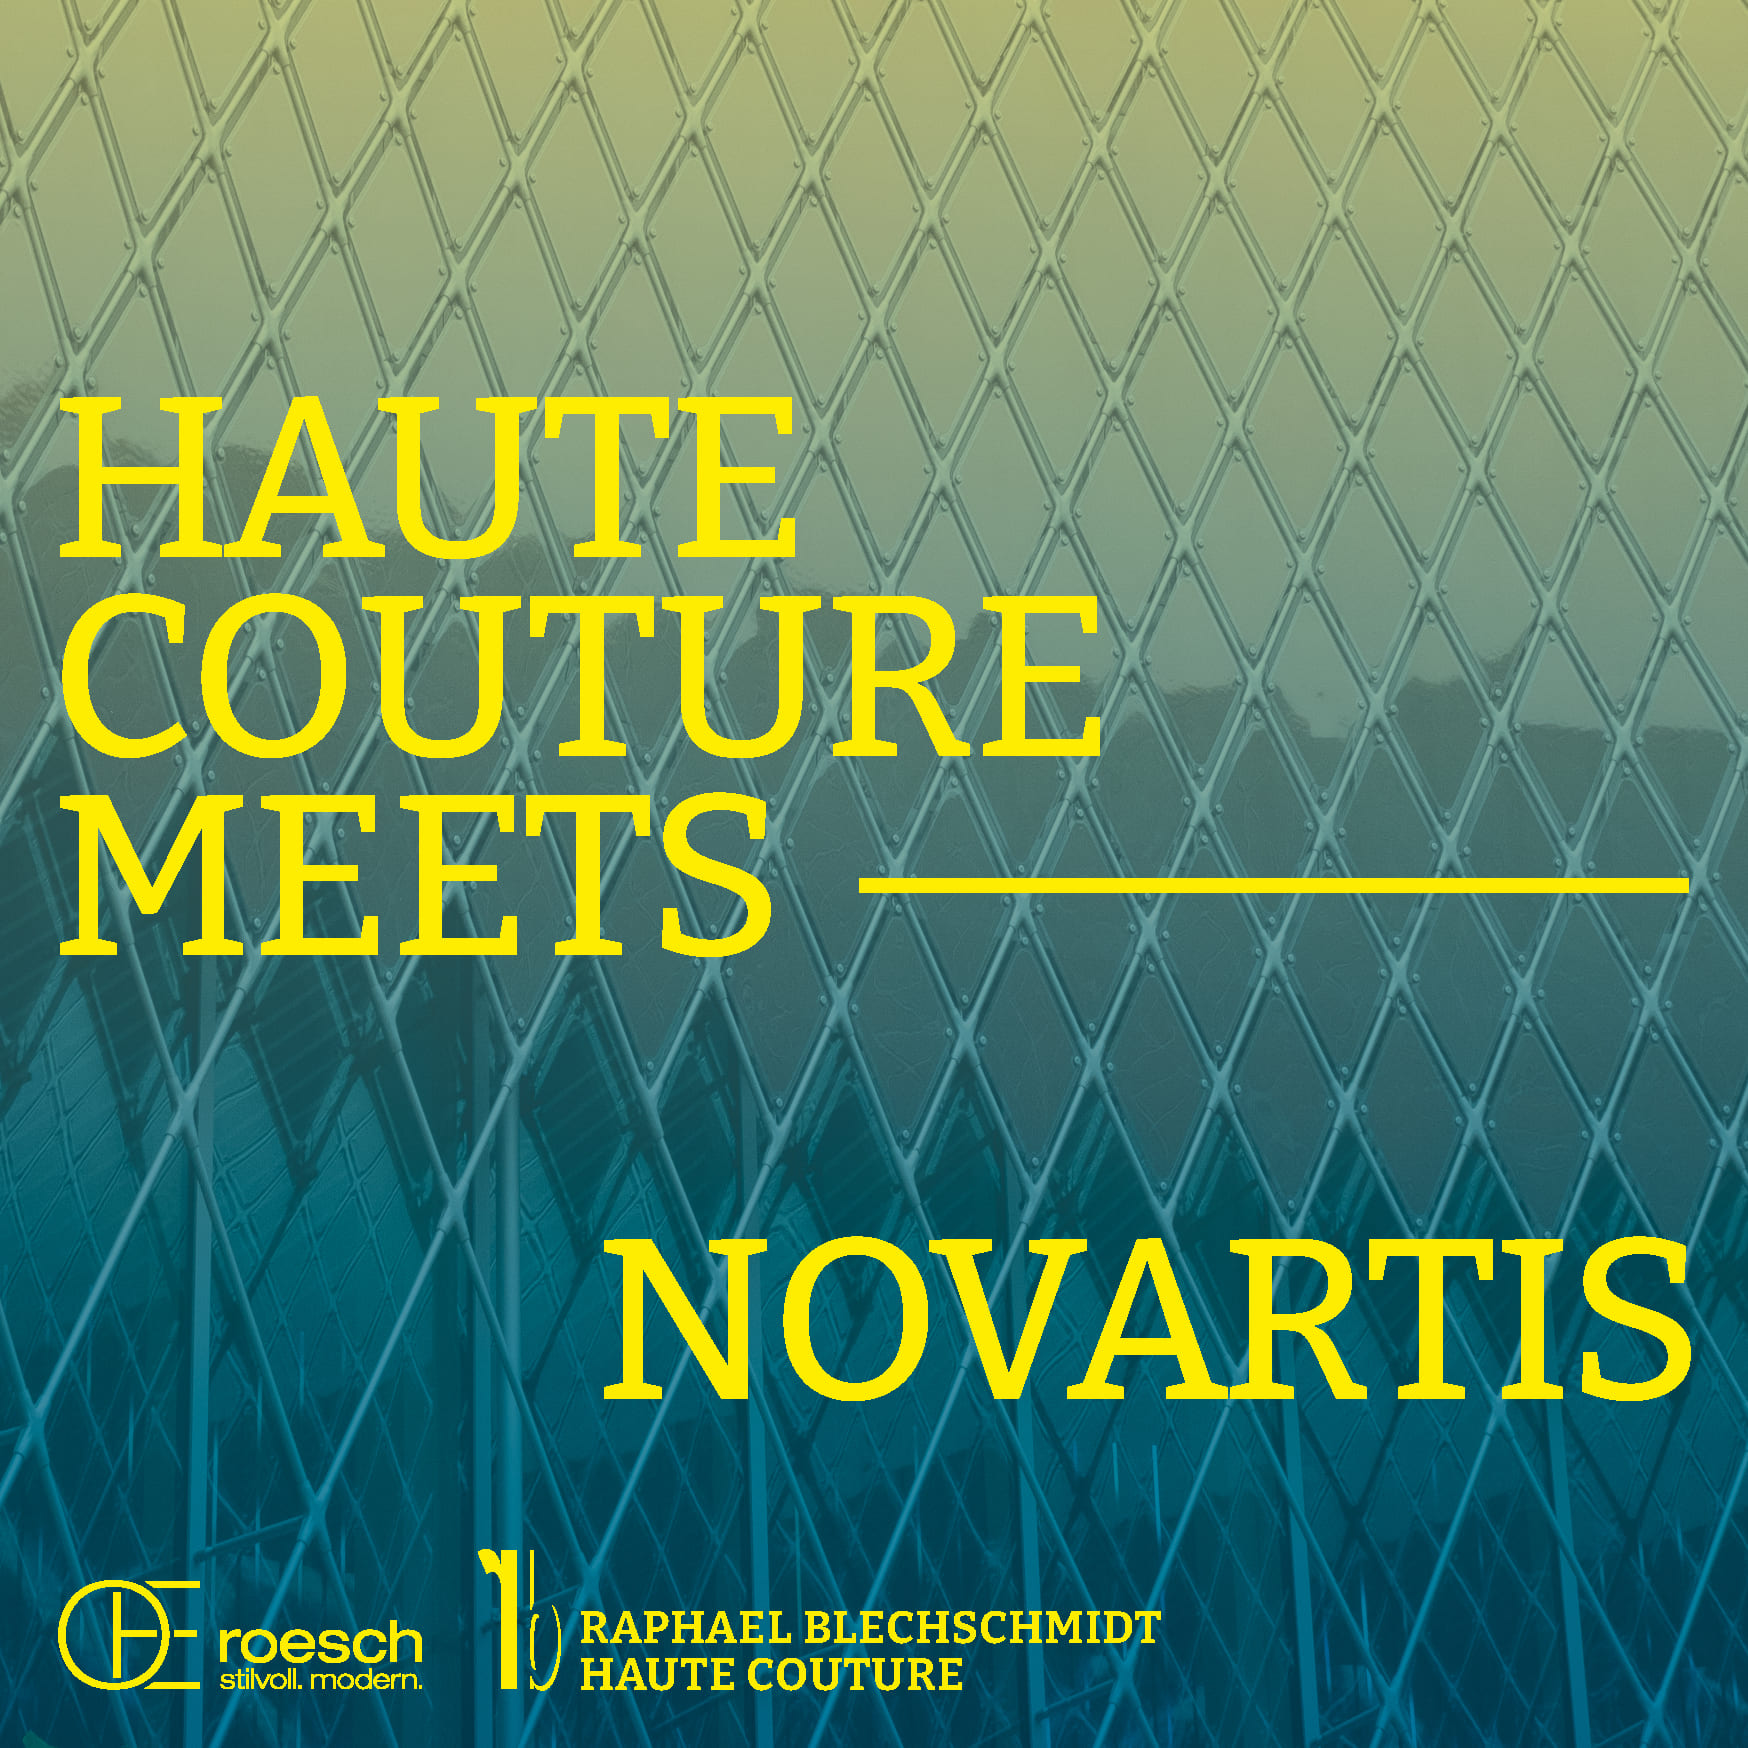 Haute Couture meets Novartis